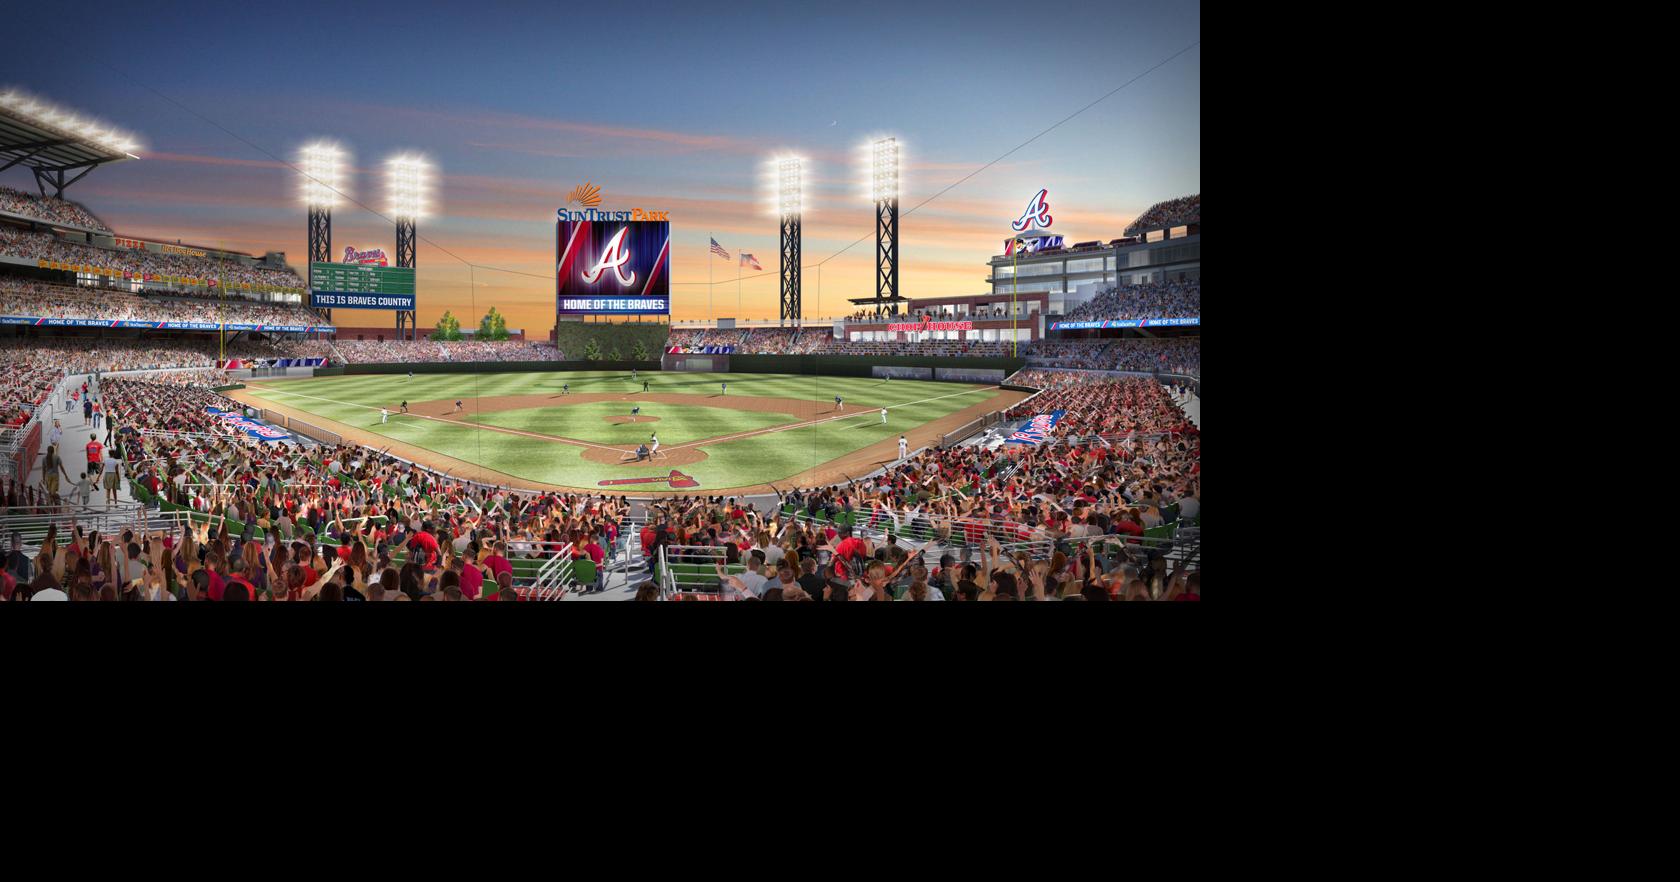 The Atlanta Braves' new stadium will be SunTrust Park, PHOTOS, Professional